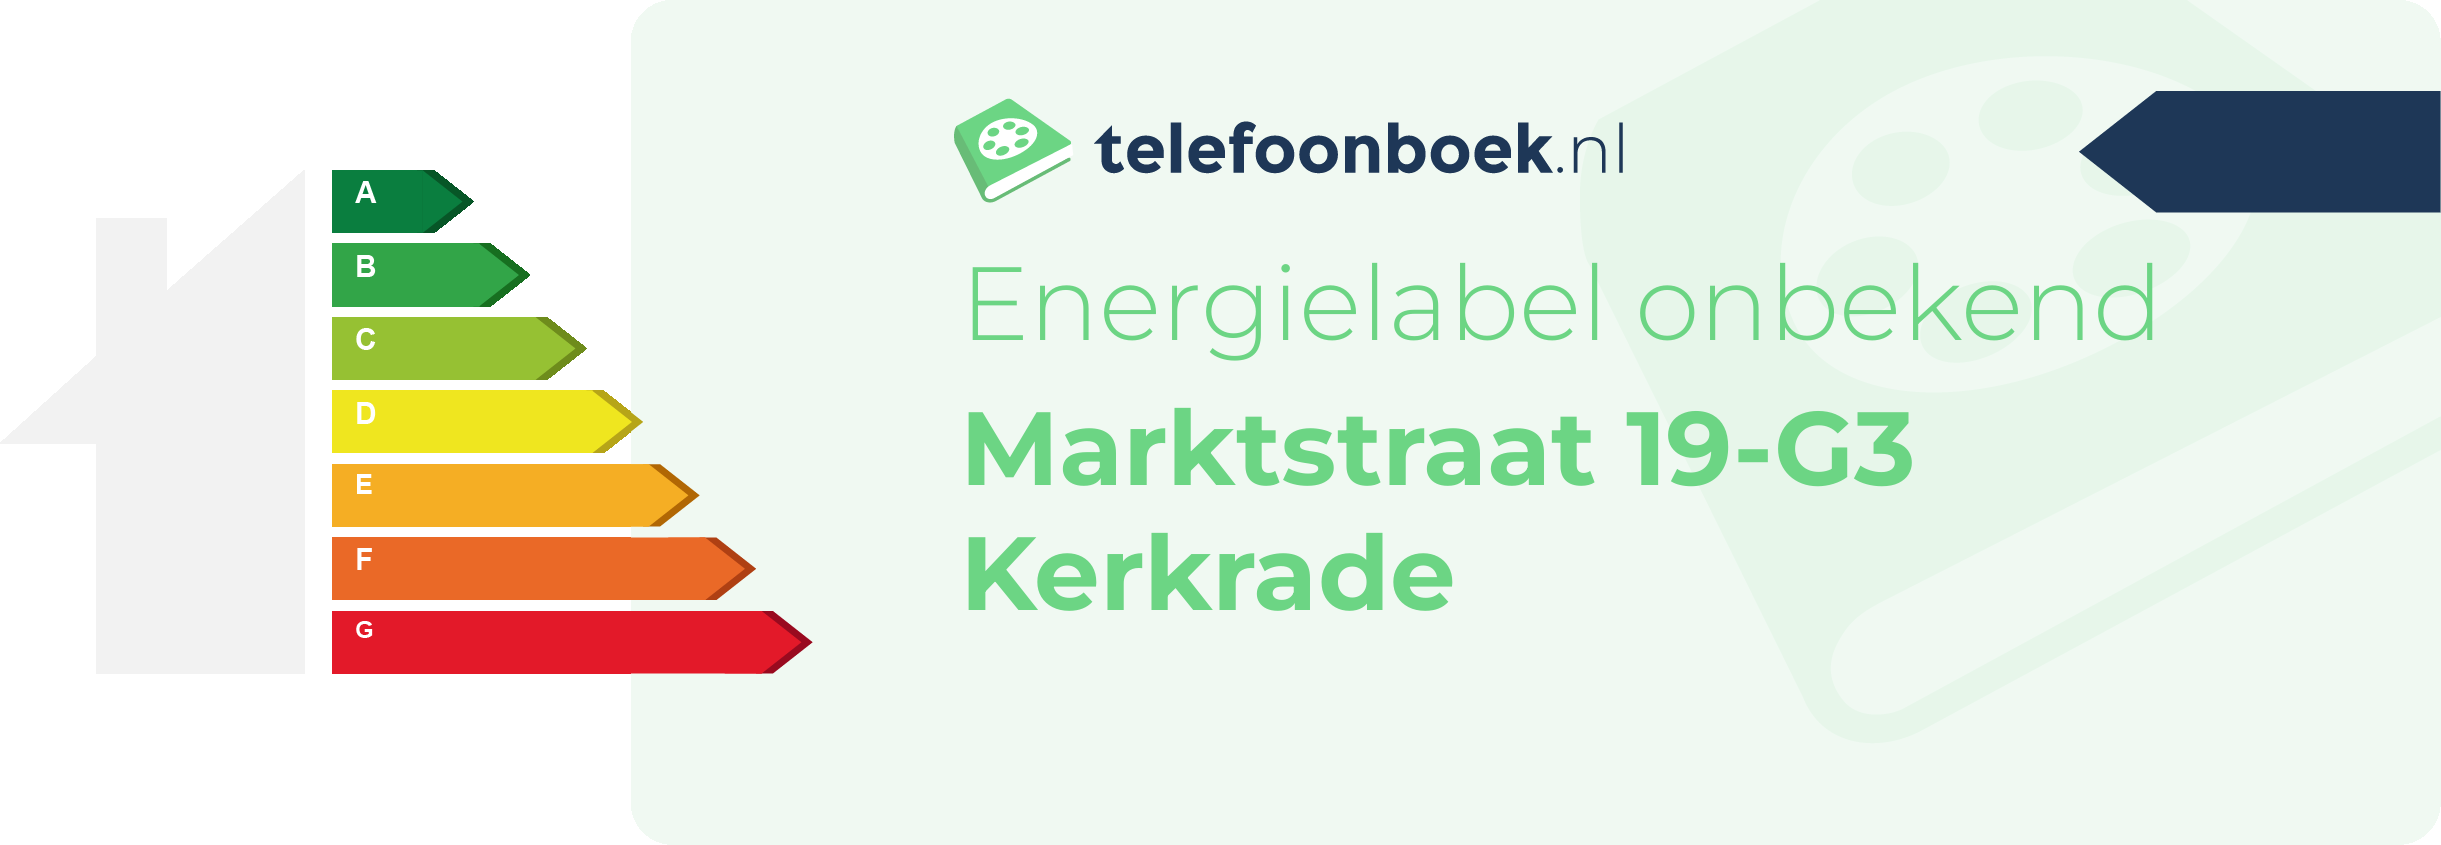 Energielabel Marktstraat 19-G3 Kerkrade